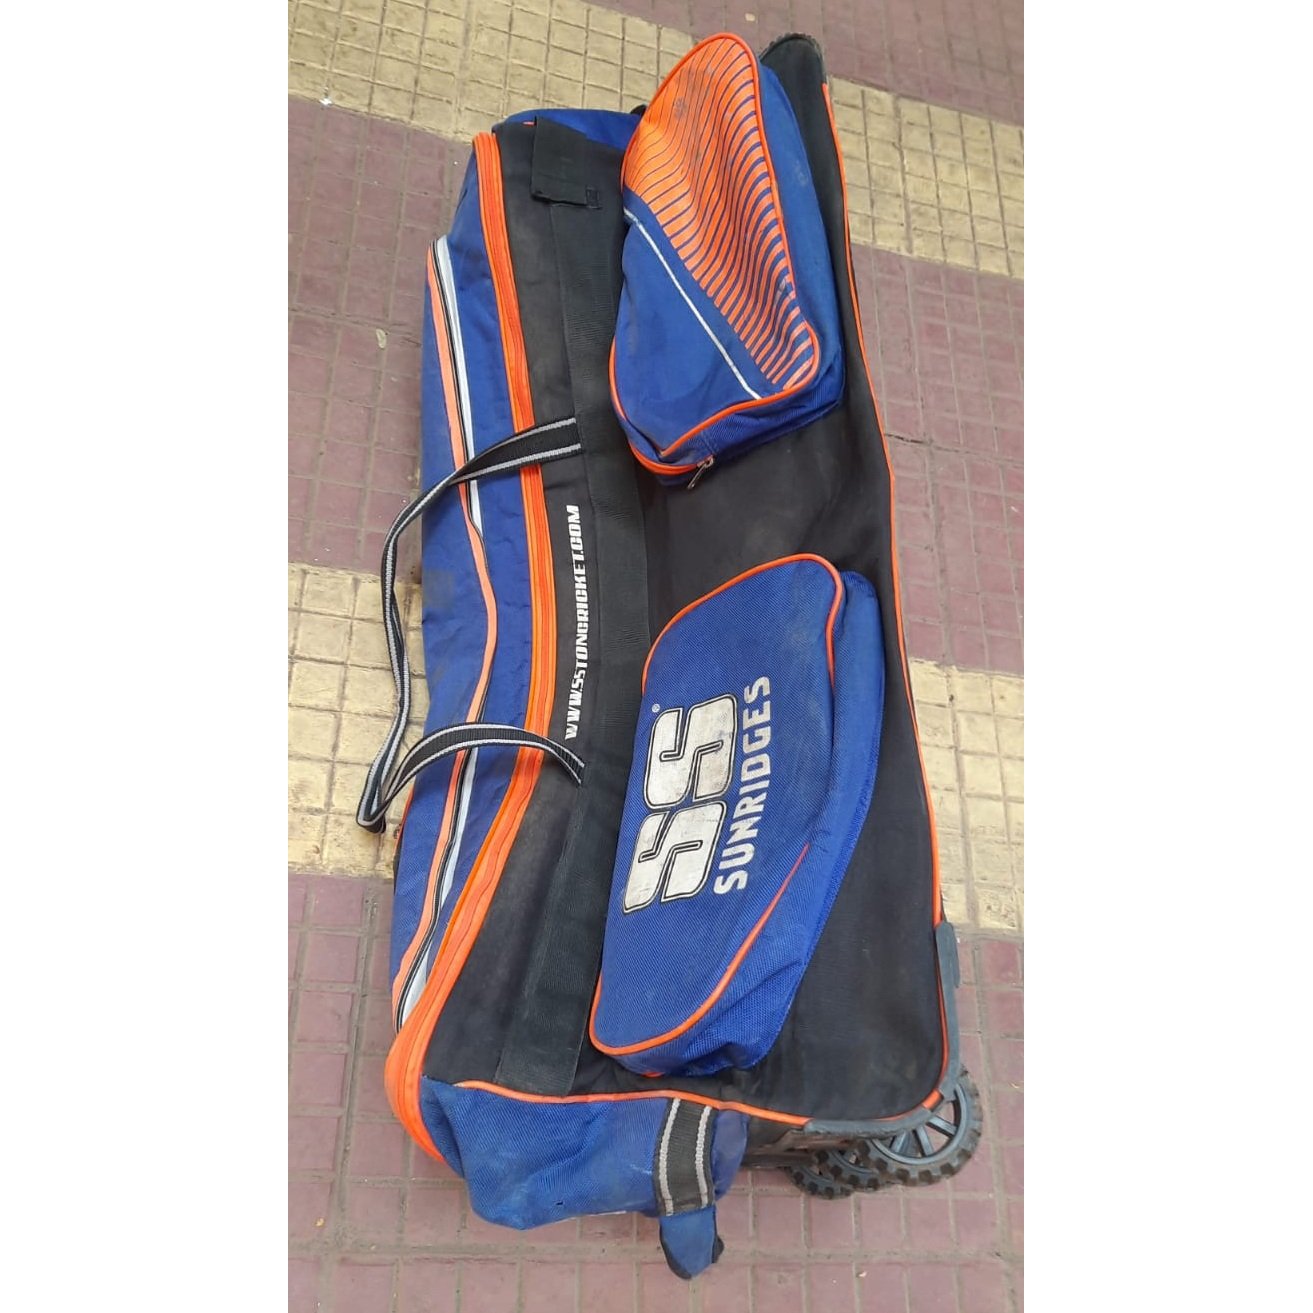 SS Gladiator Cricket Kit Bag,- Buy SS Gladiator Cricket Kit Bag Online at  Lowest Prices in India - | khelmart.com